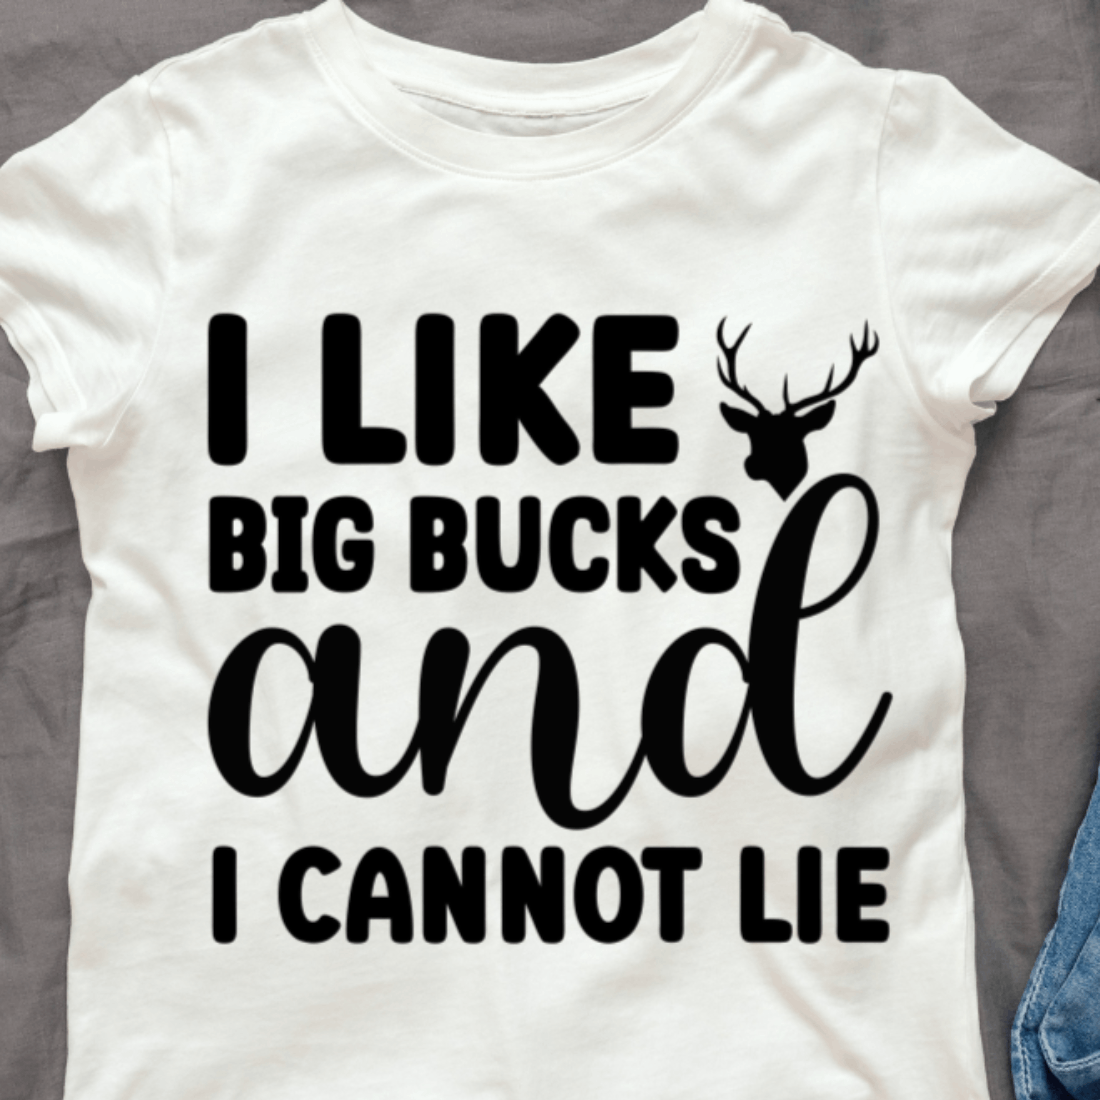 T - shirt that says i like big bucks and i cannot't lie.